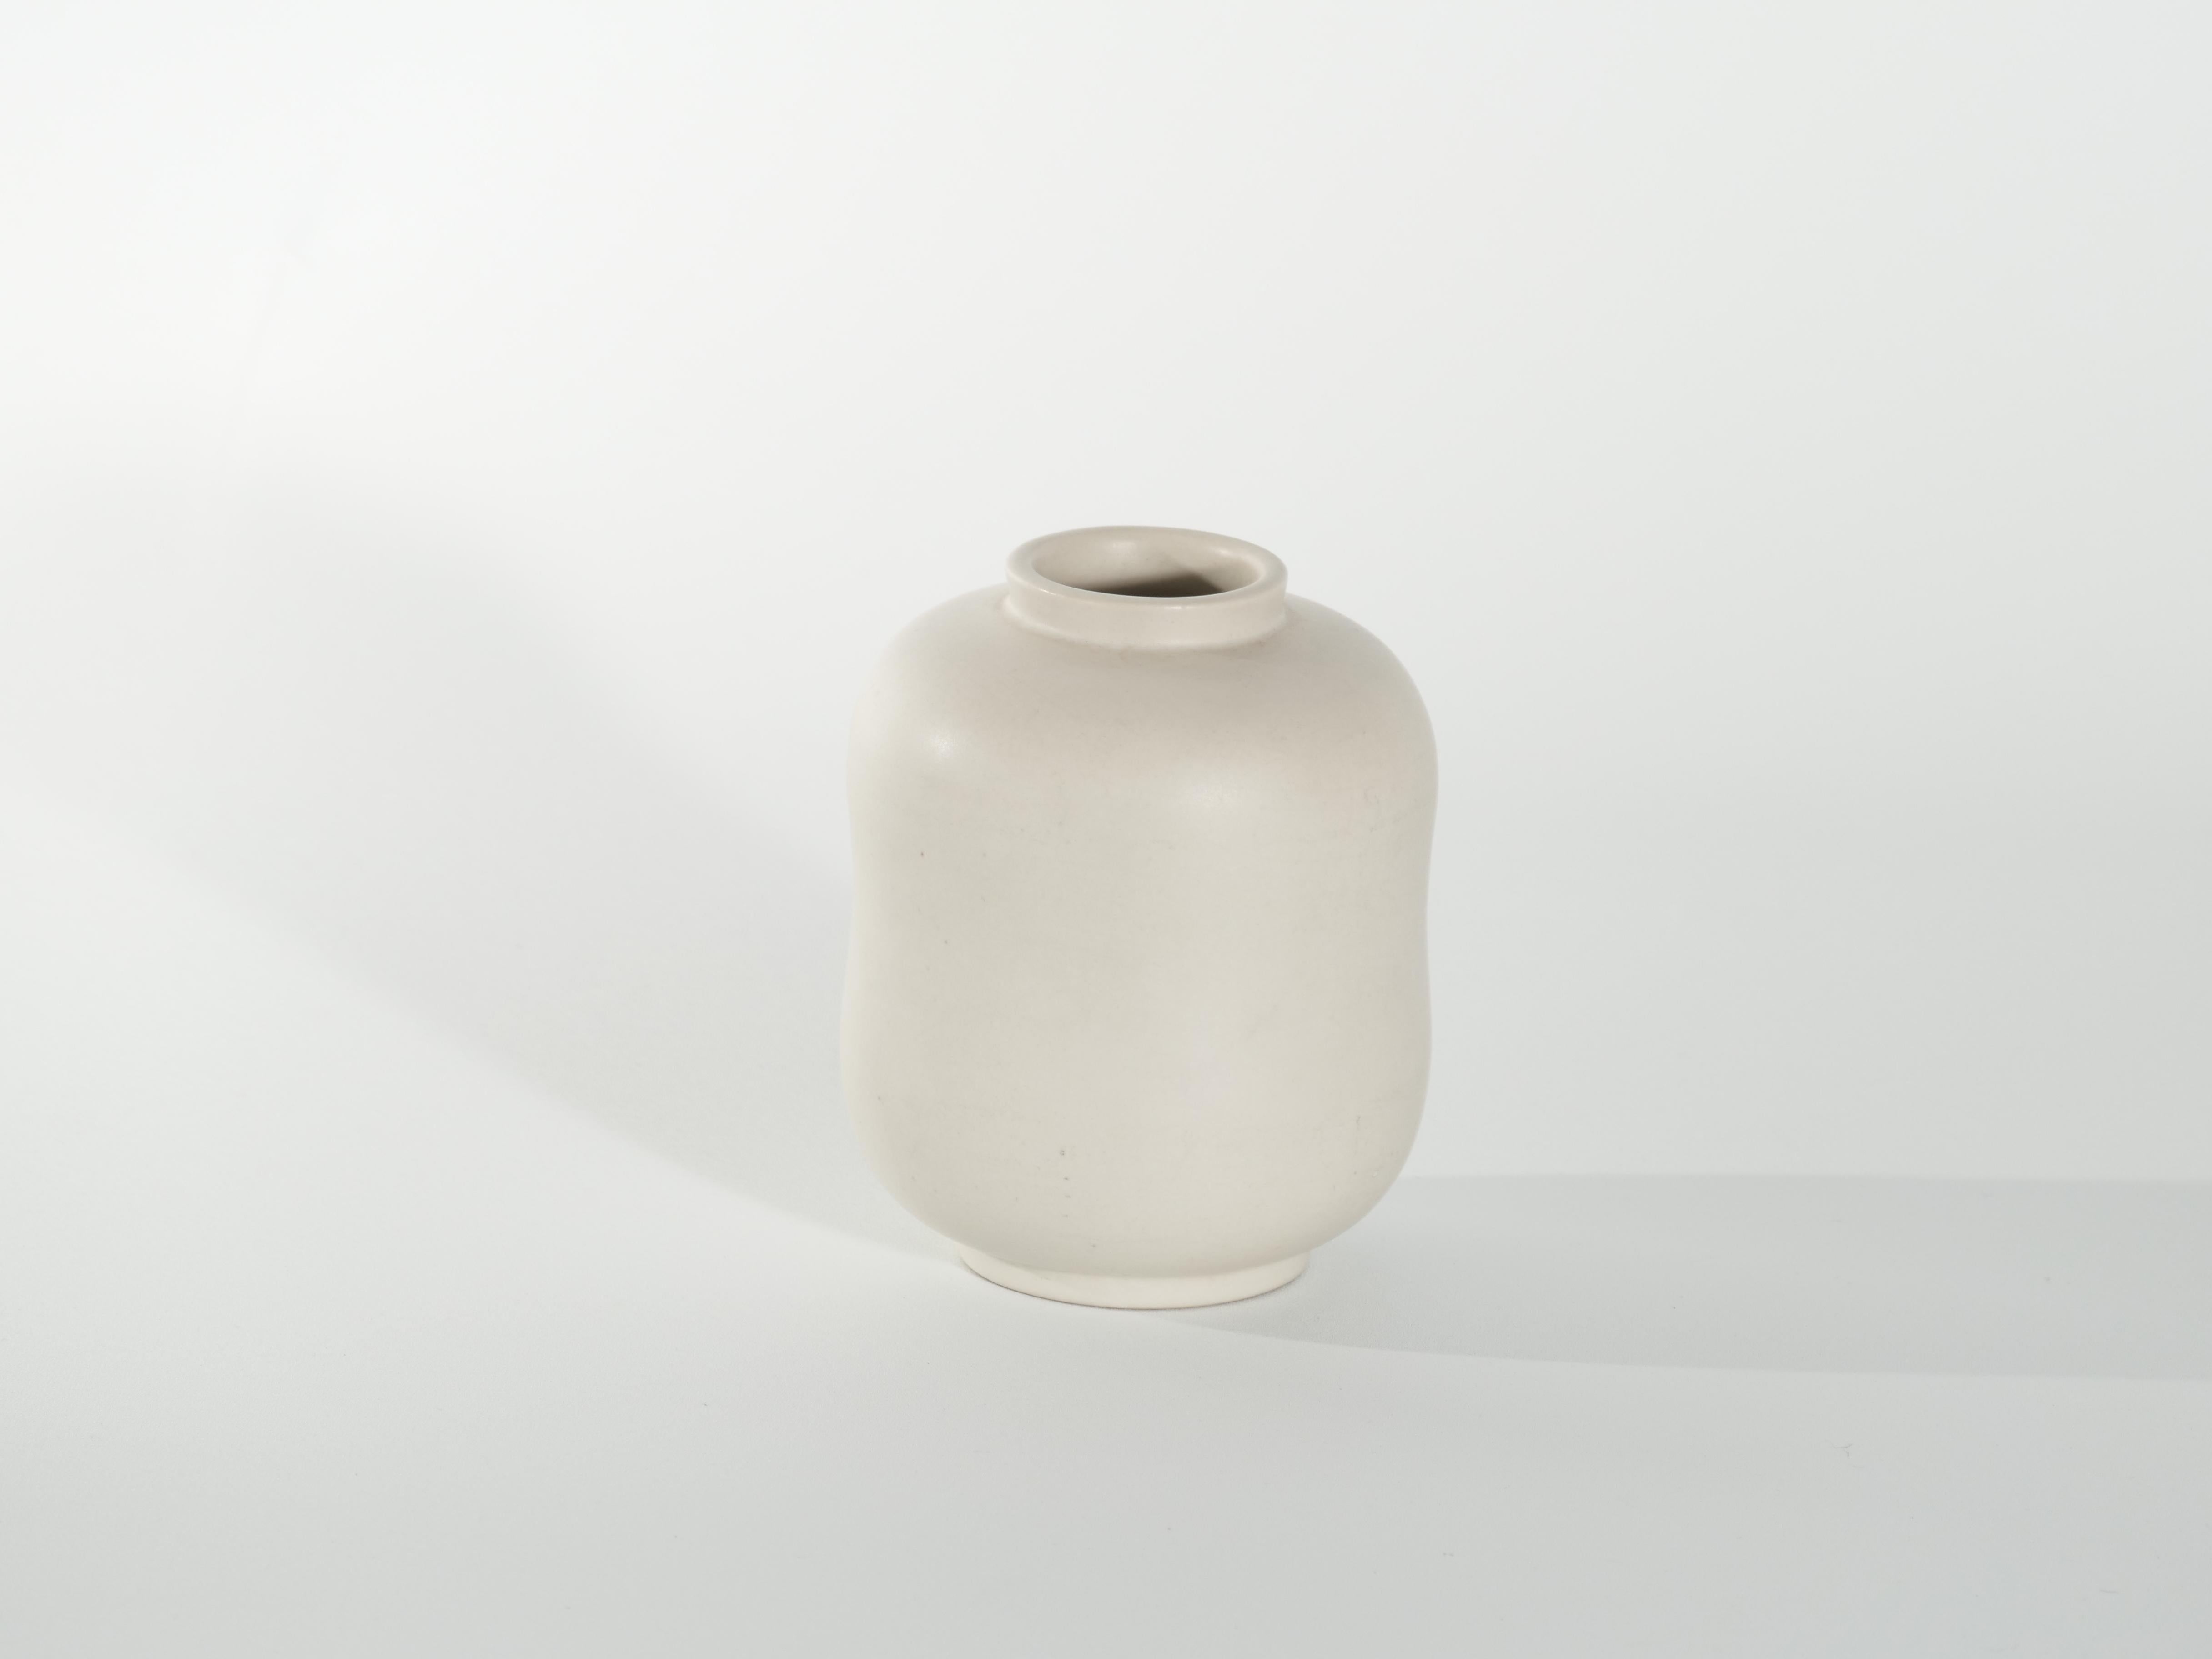 1940’s Scandinavian Modern Carrara Vase by Wilhelm Kåge for Gustavsberg   For Sale 2